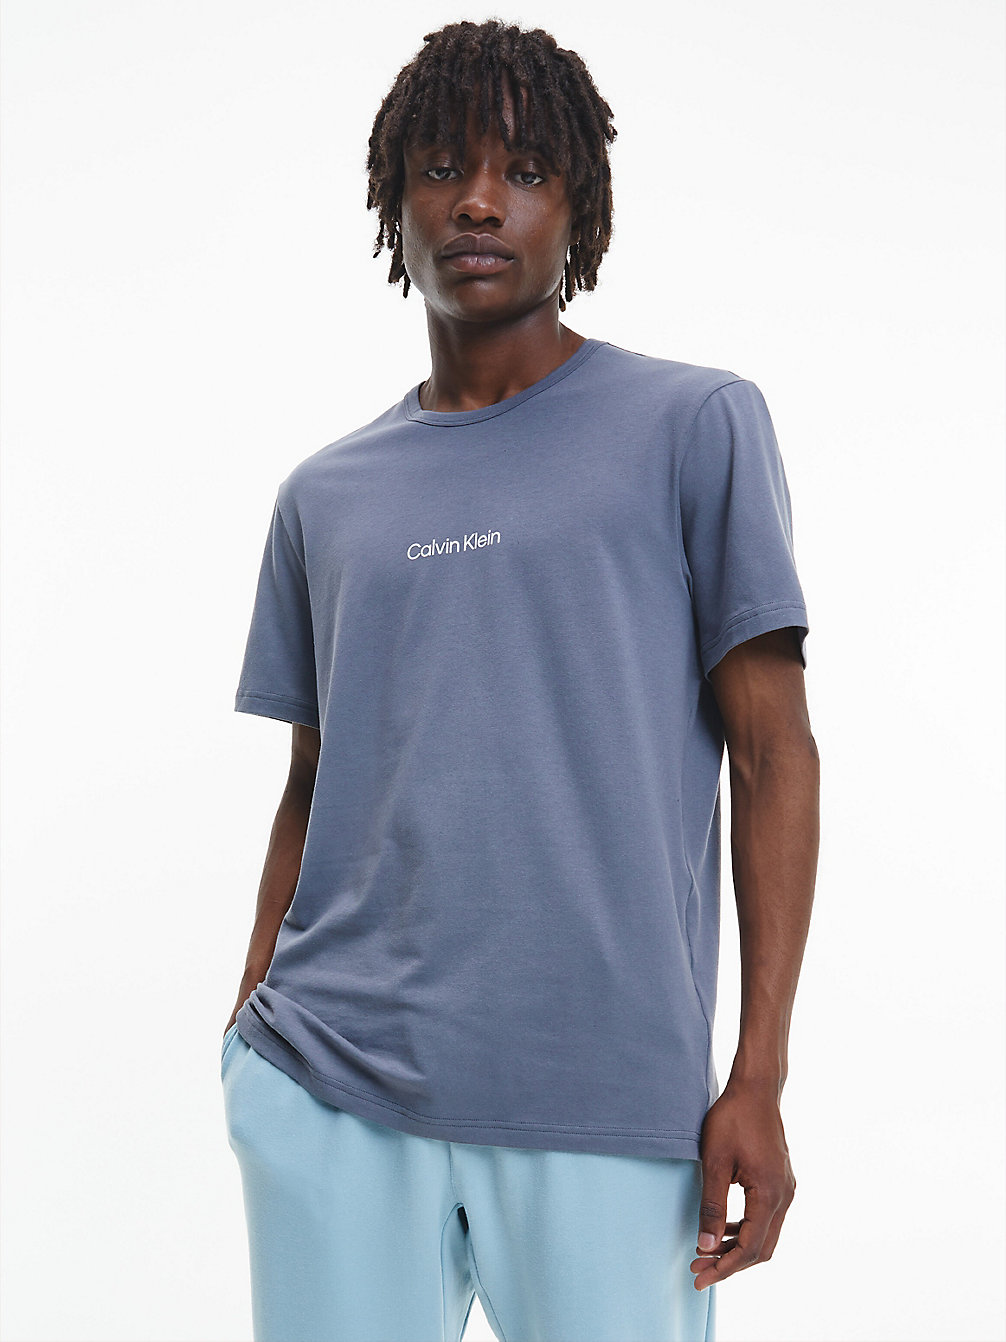 SLEEK GREY > T-Shirt Po Domu — Modern Structure > undefined Mężczyźni - Calvin Klein